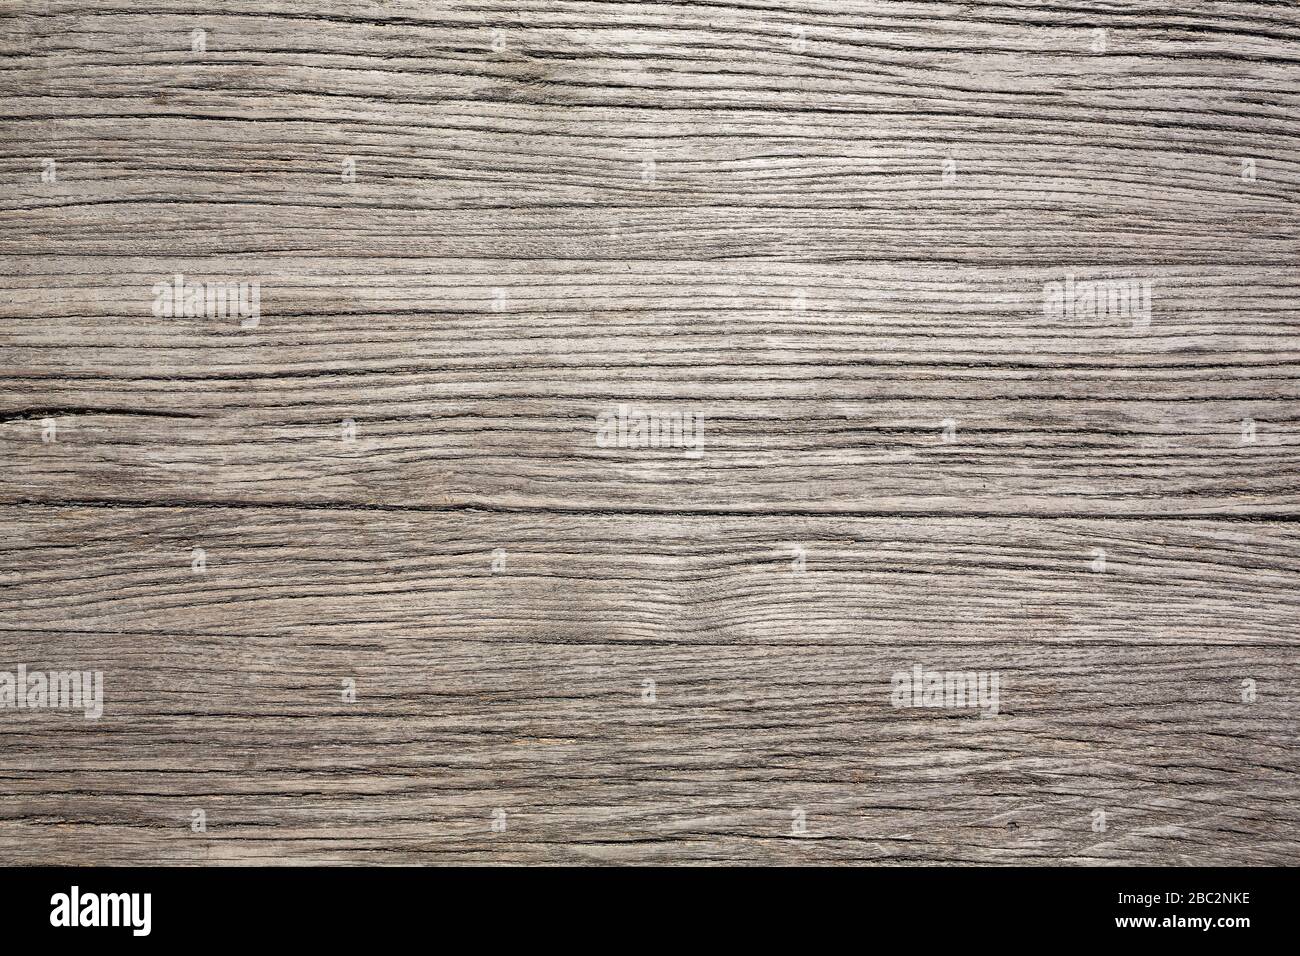 Textura rústica de madera con fibras horizontales Foto de stock